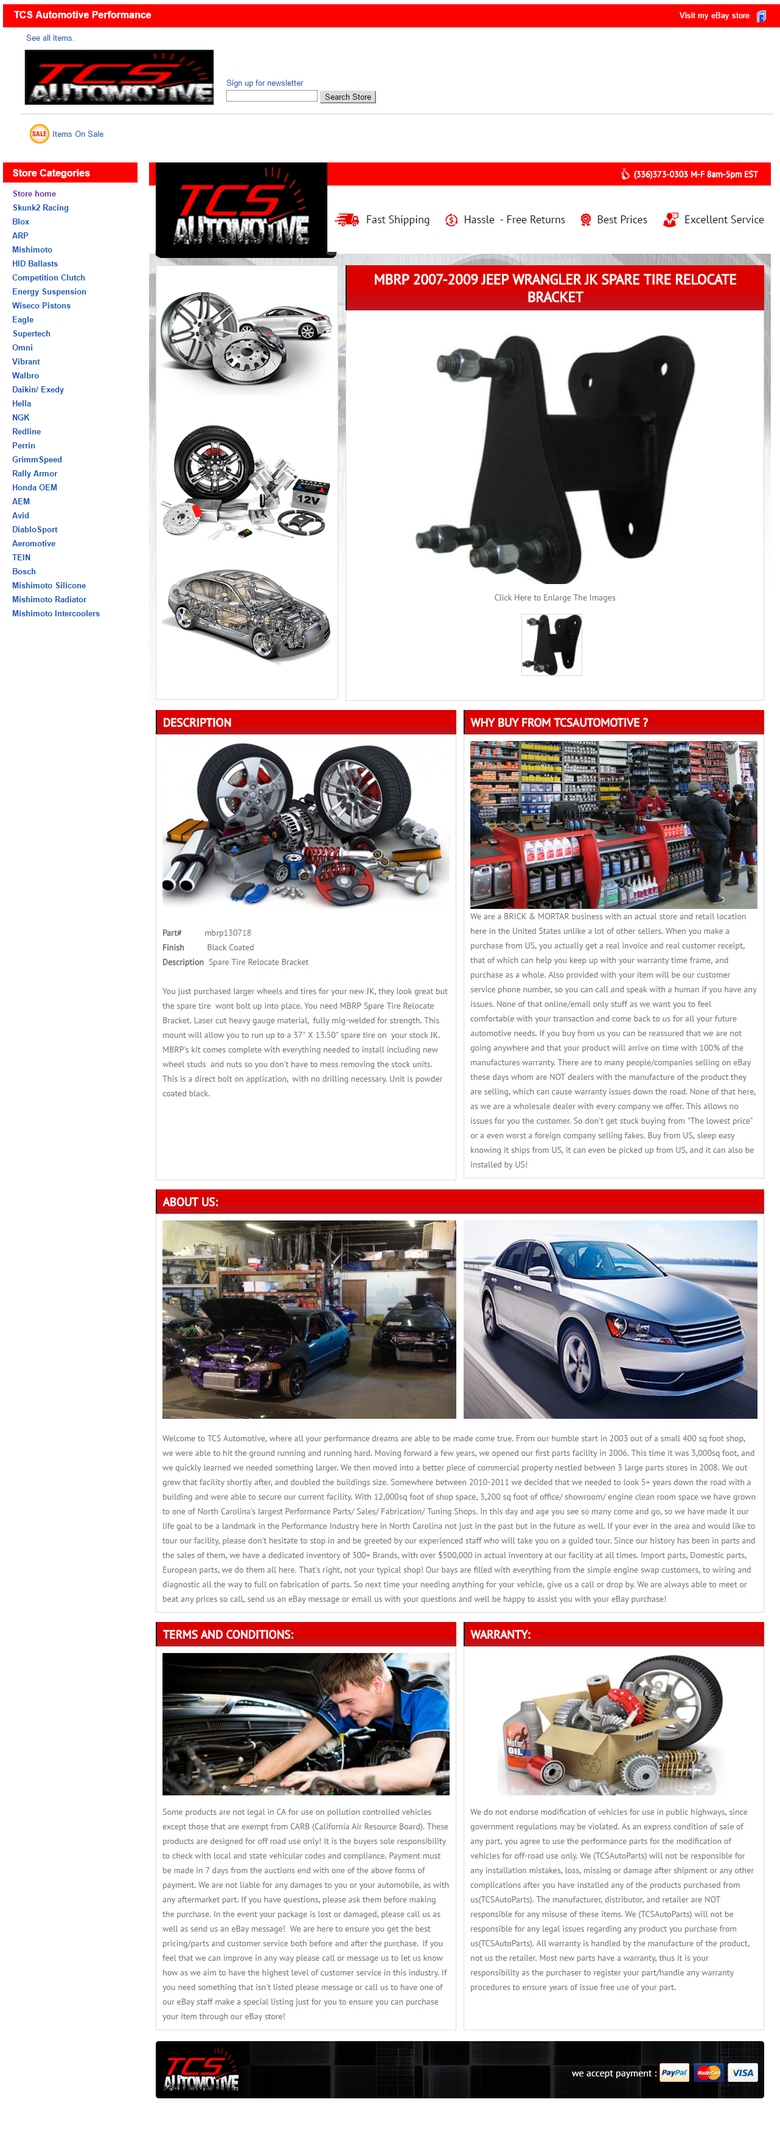 TCS-Automotive-Performance eBay store & Listing Design